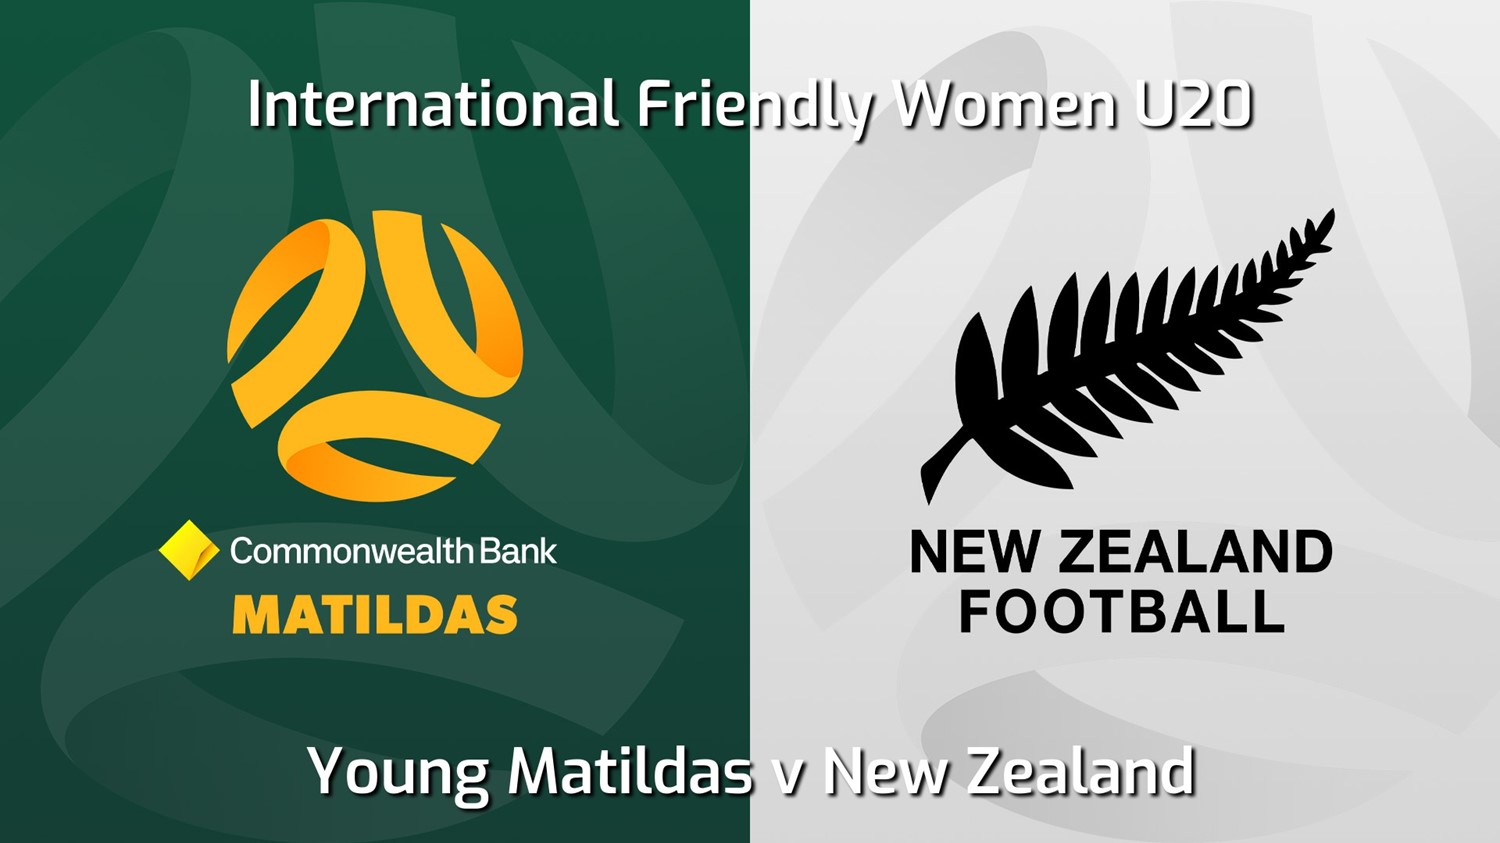 220410-International Friendly Women U20 Friendly - Young Matildas v New Zealand Women U20s Minigame Slate Image